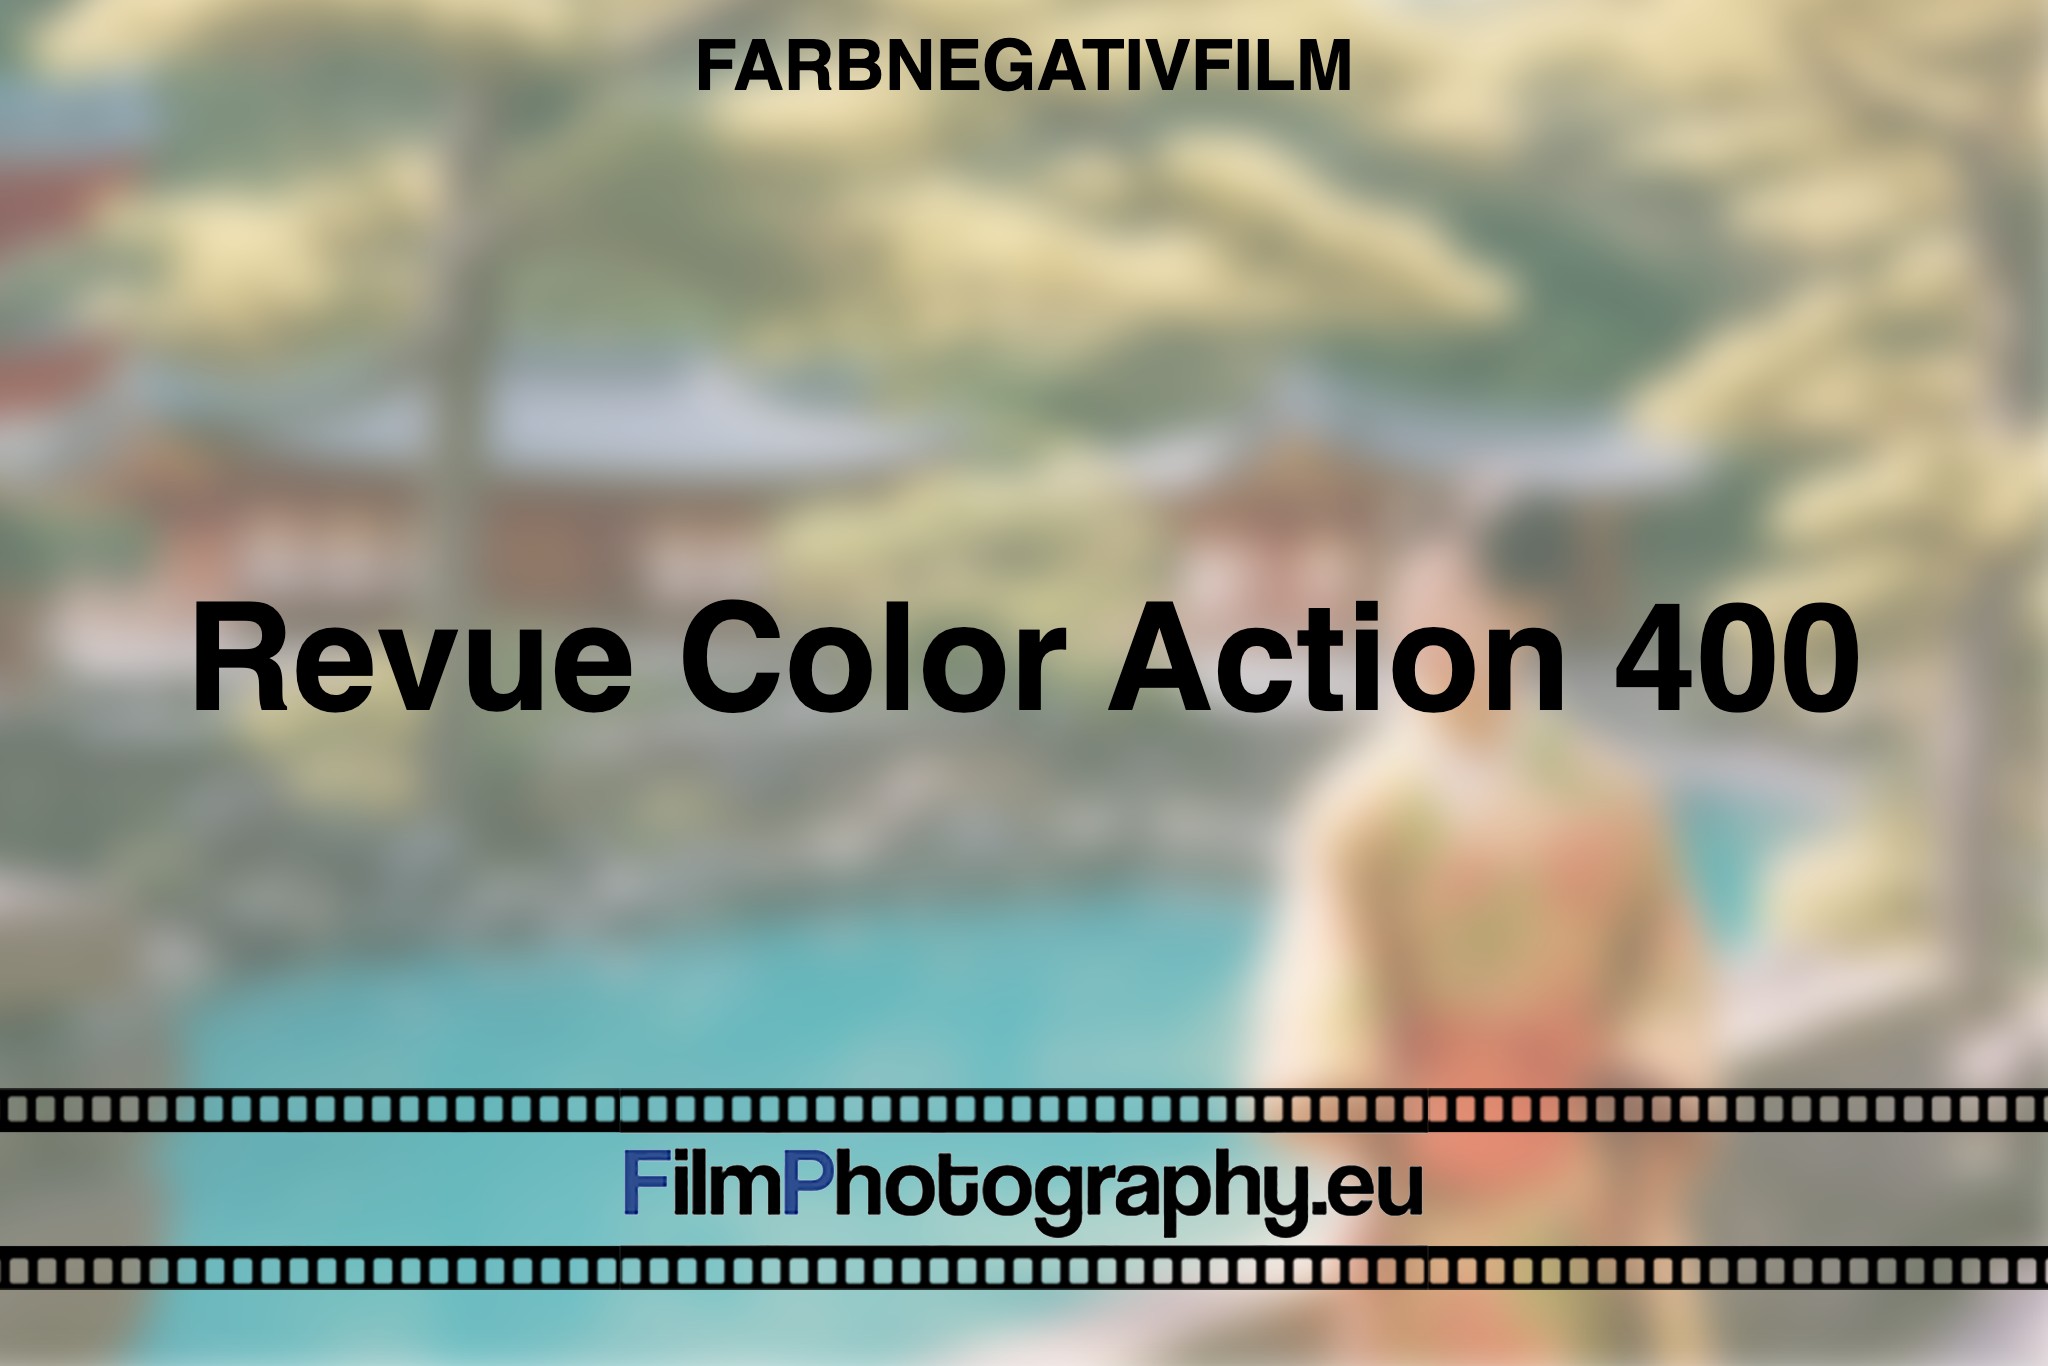 revue-color-action-400-farbnegativfilm-bnv